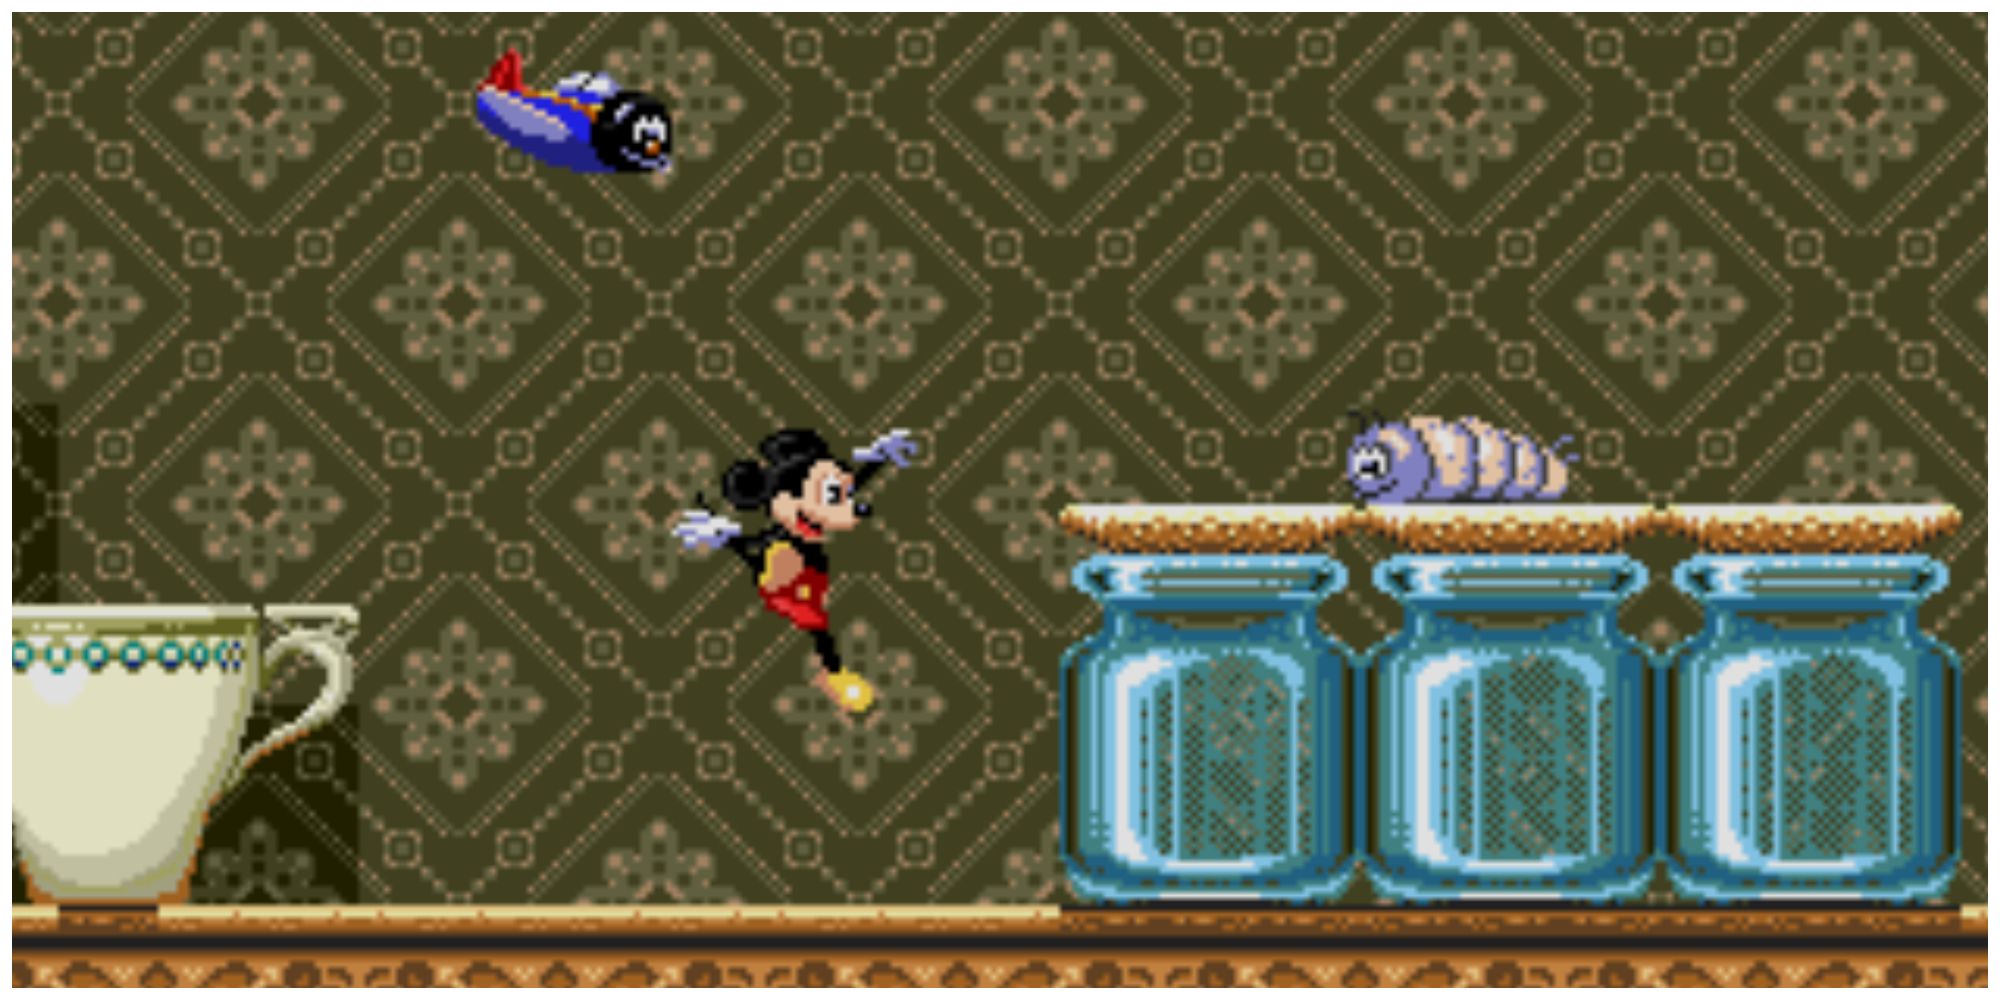 Castle of Illusion Starring Mickey Mouse Sega Genesis